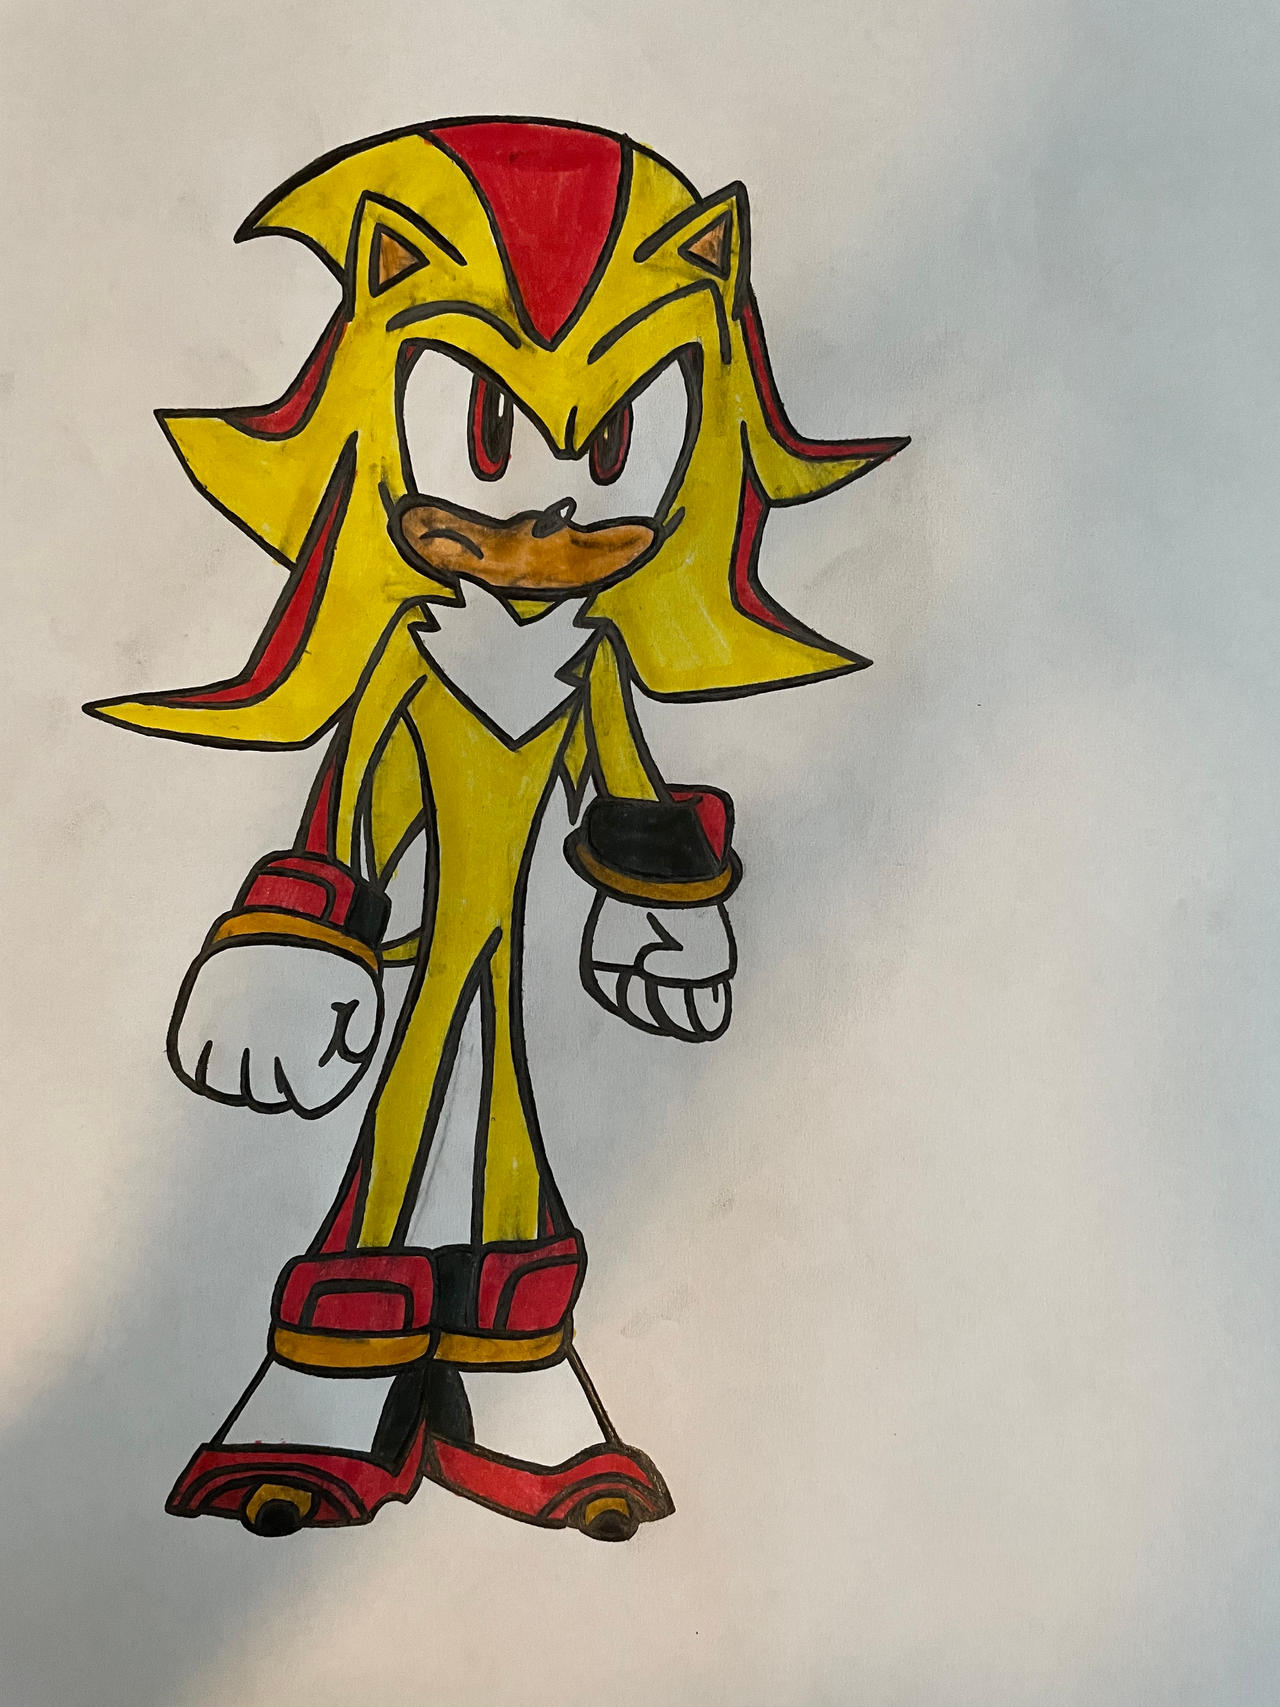 Sonic X: Super Shadow  Shadow the hedgehog, Super shadow, Sonic